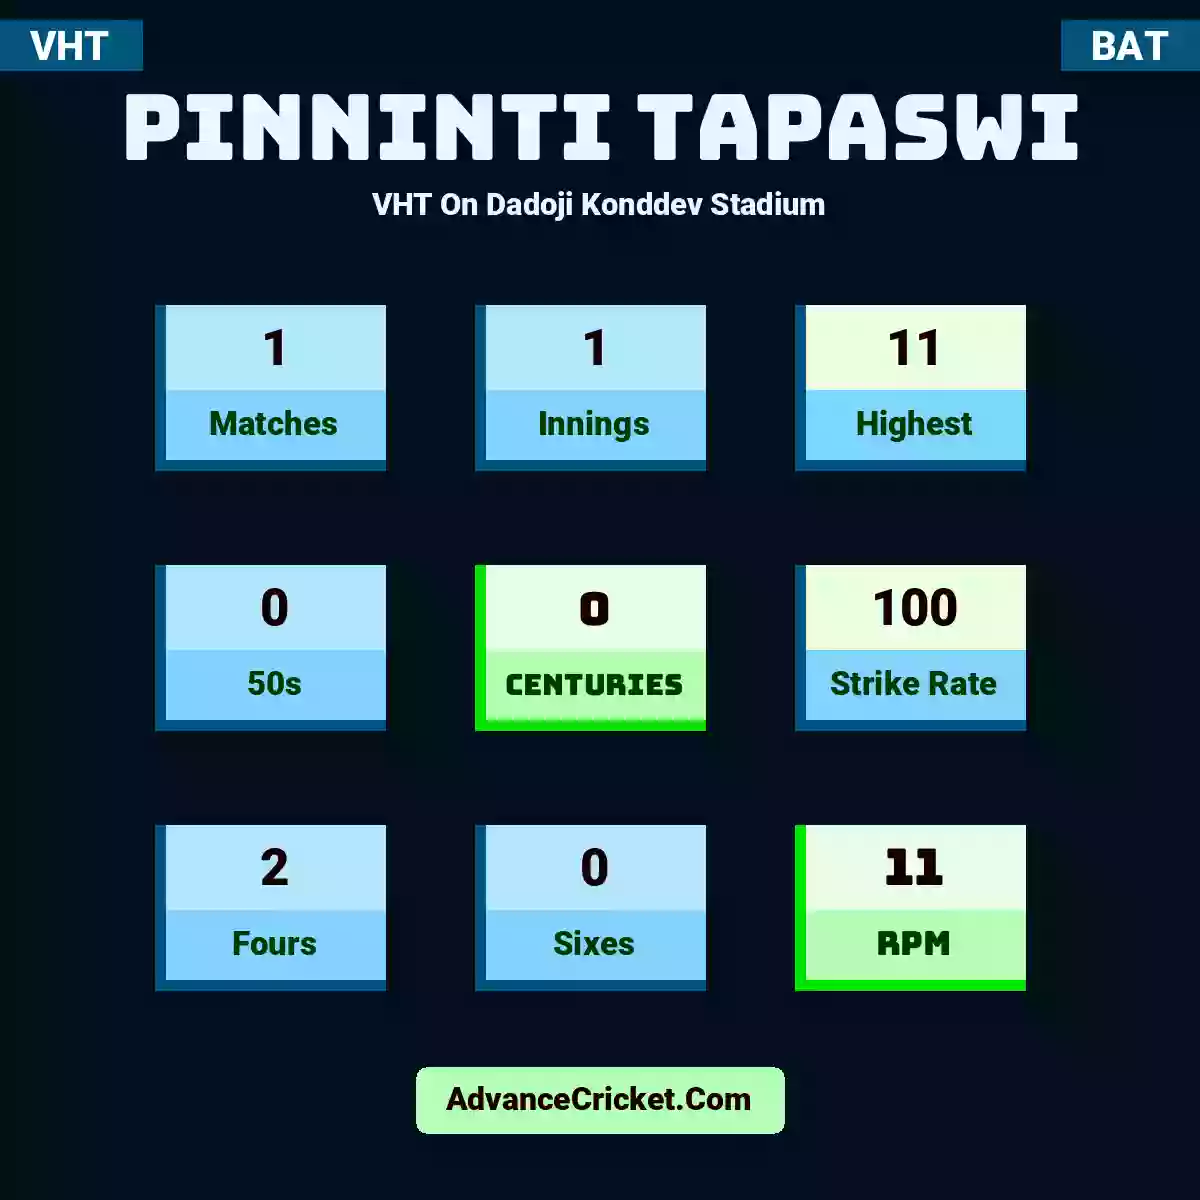 Pinninti Tapaswi VHT  On Dadoji Konddev Stadium, Pinninti Tapaswi played 1 matches, scored 11 runs as highest, 0 half-centuries, and 0 centuries, with a strike rate of 100. P.Tapaswi hit 2 fours and 0 sixes, with an RPM of 11.